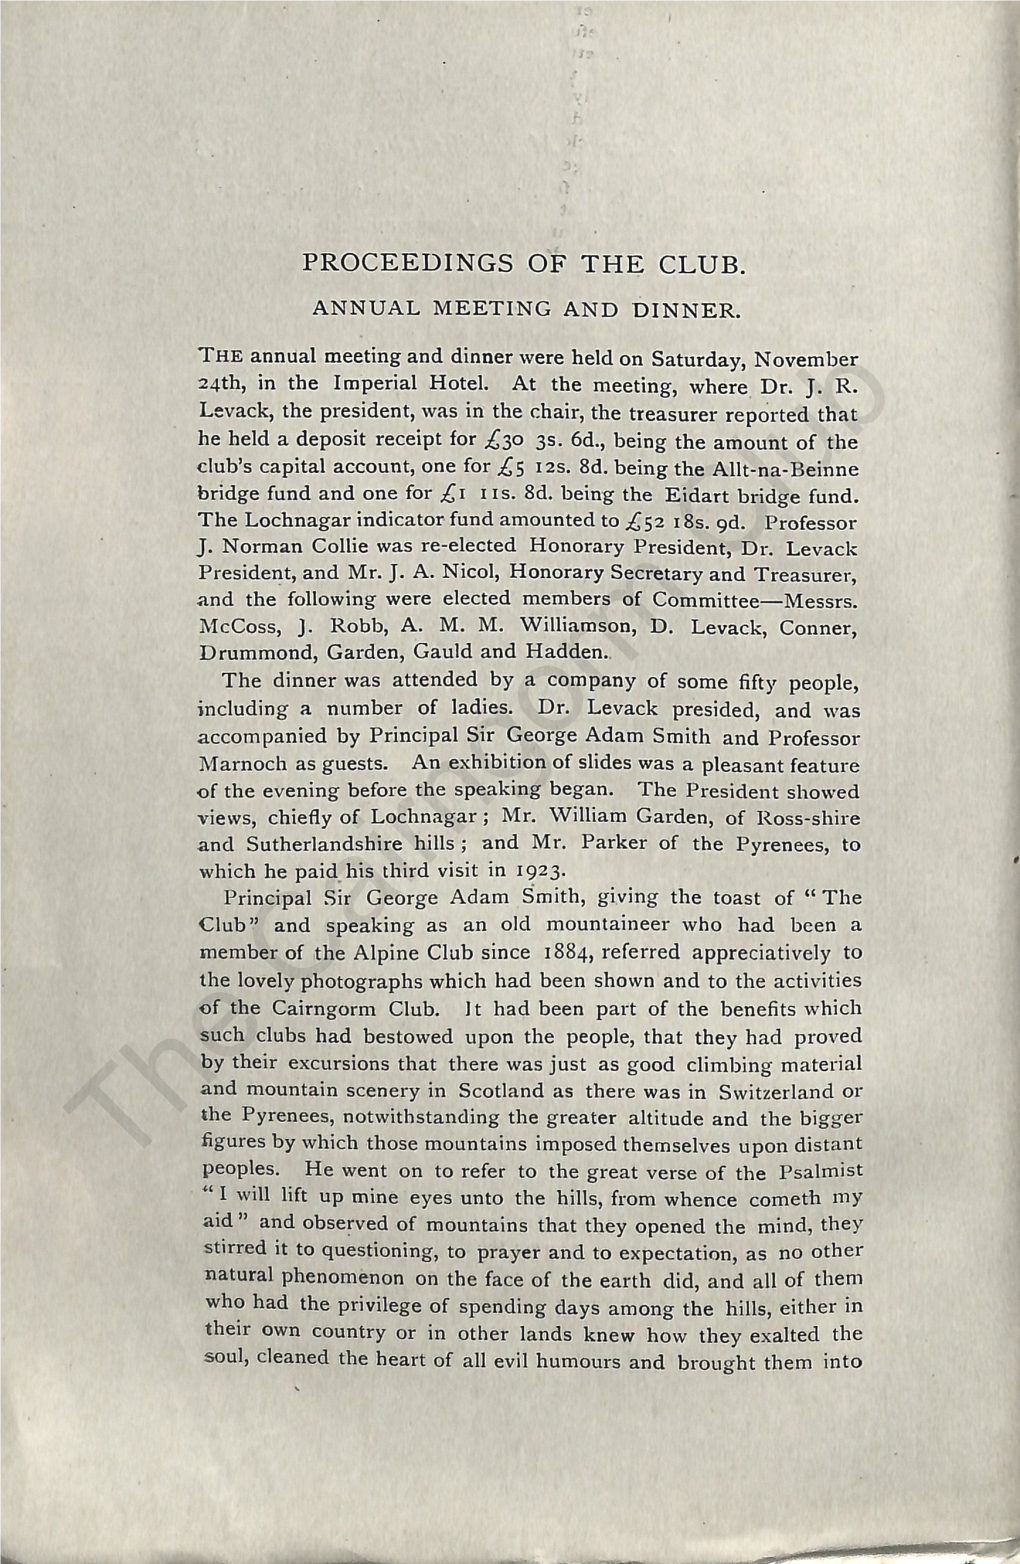 The Cairngorm Club Journal 062, 1924